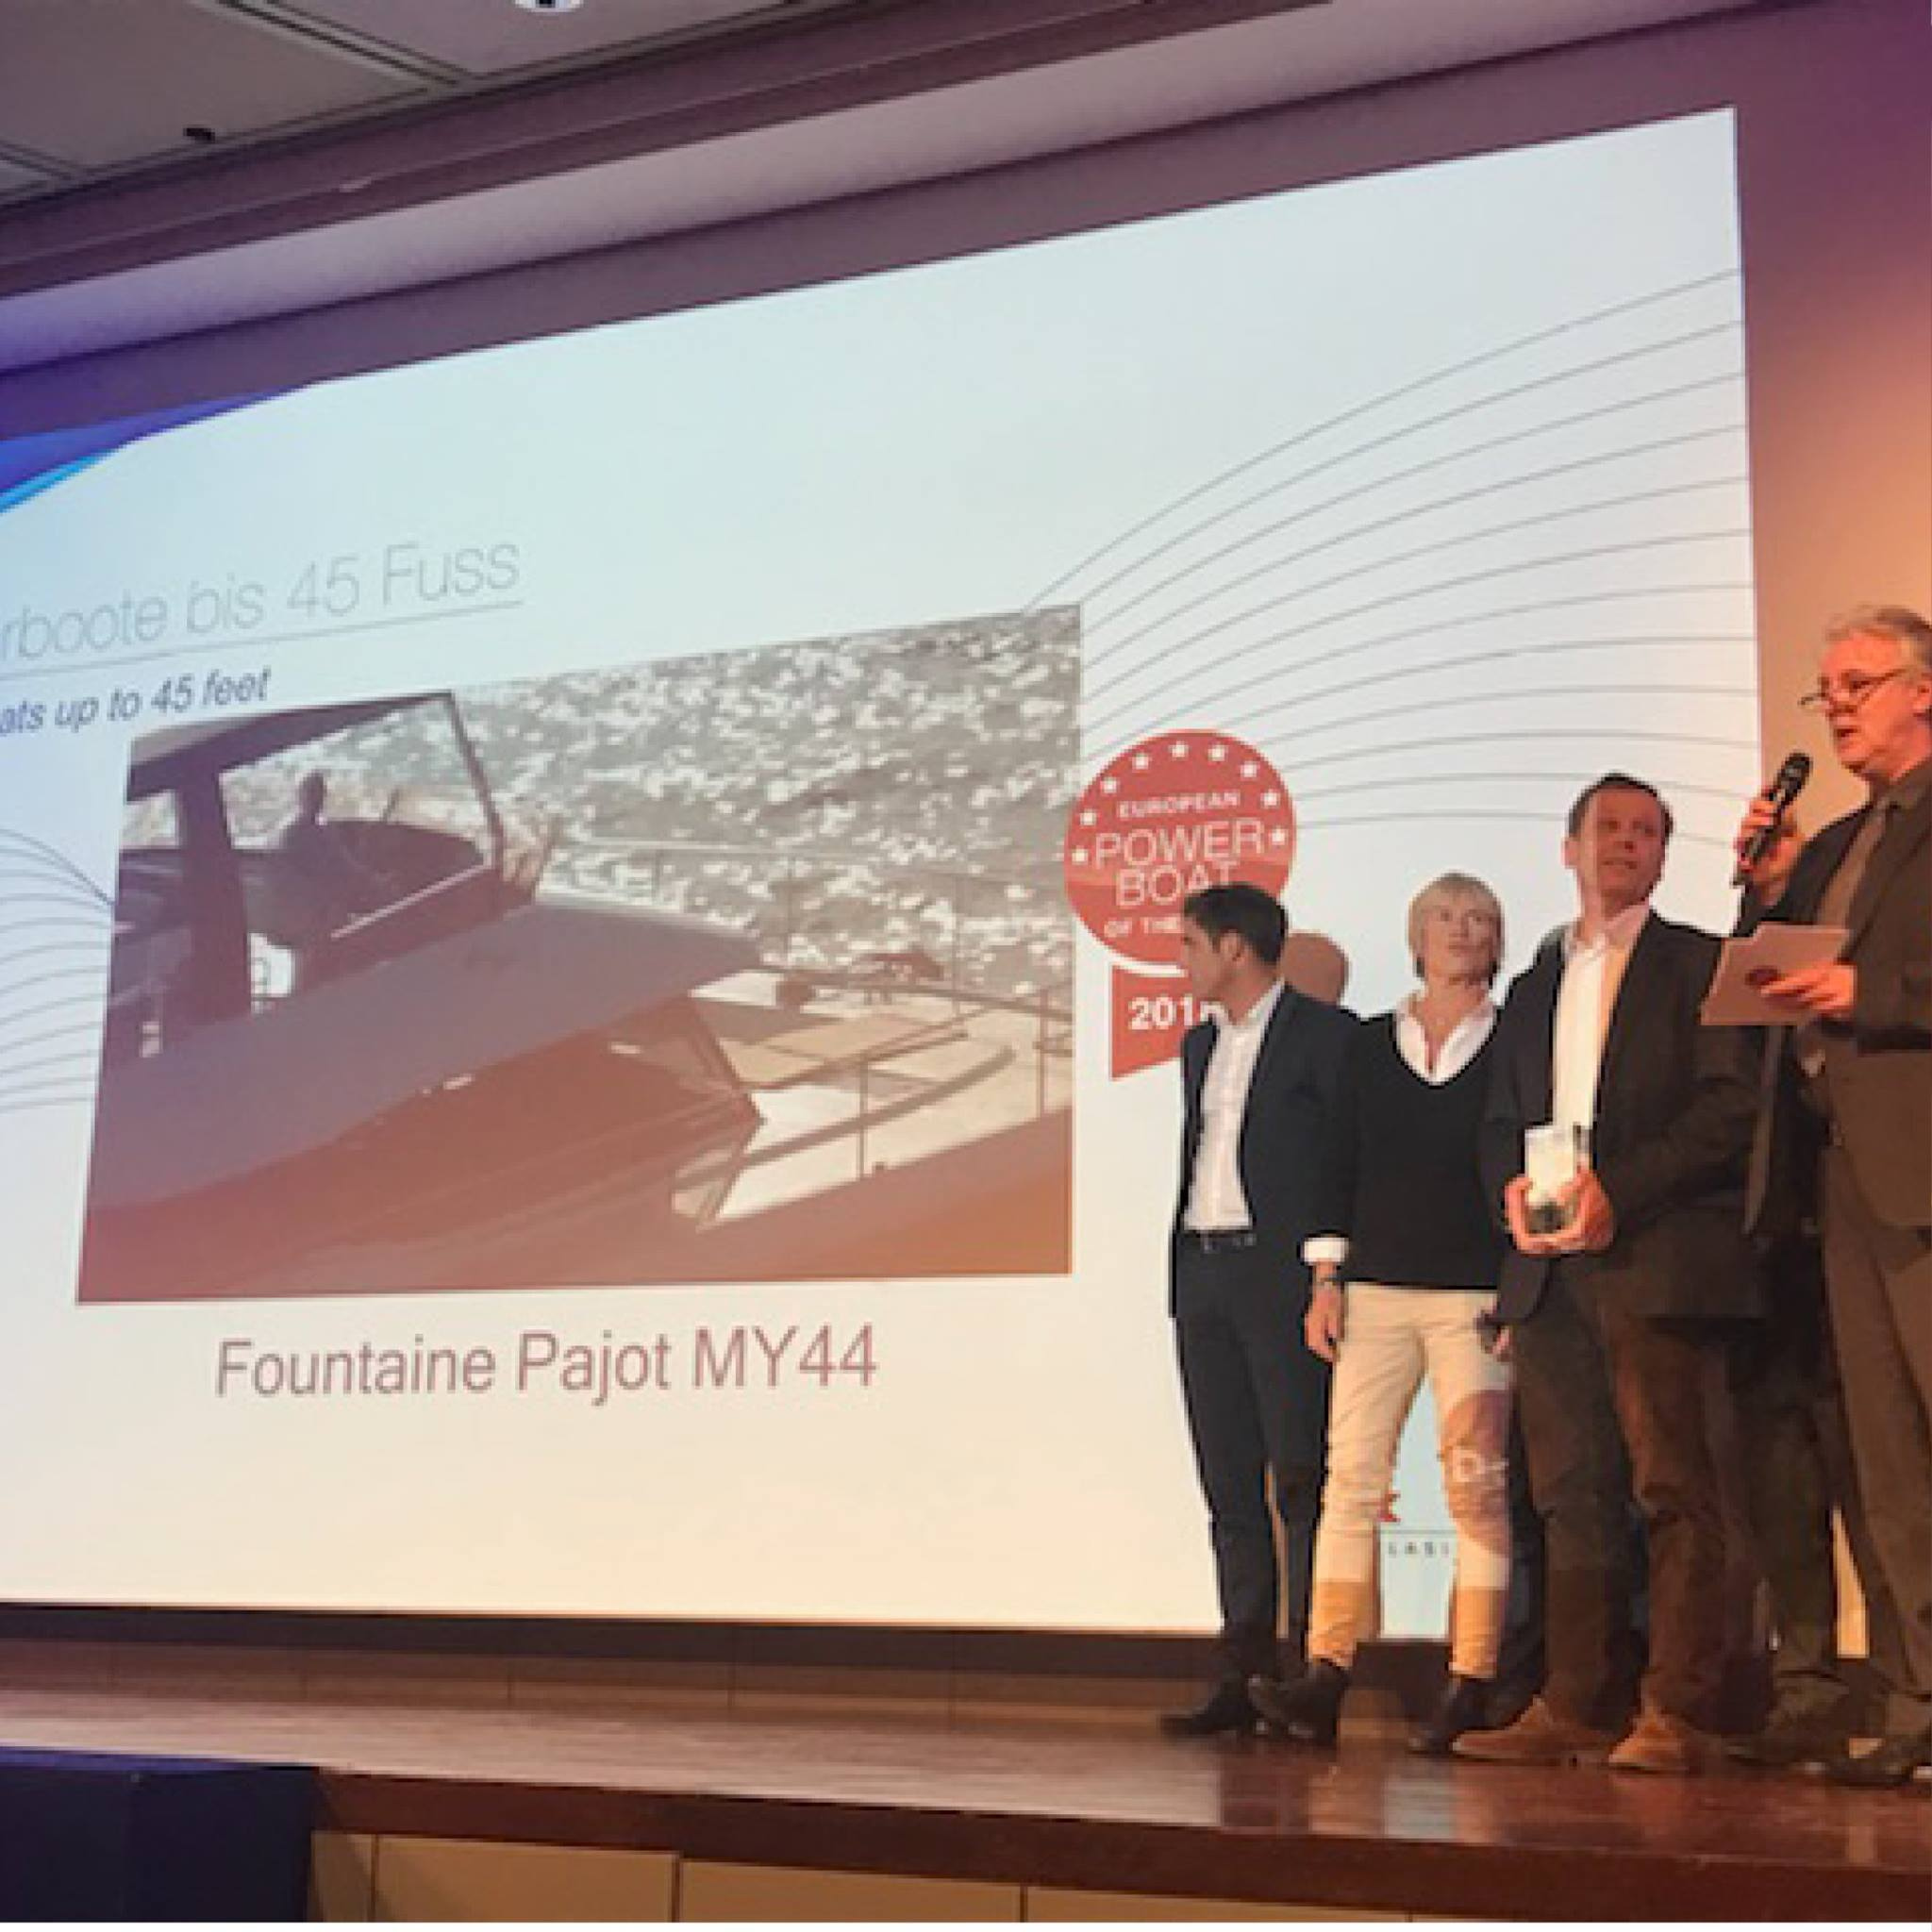 MY 44 Fountaine Pajot European Powerboat Award in BOOT Dusseldorf 2018